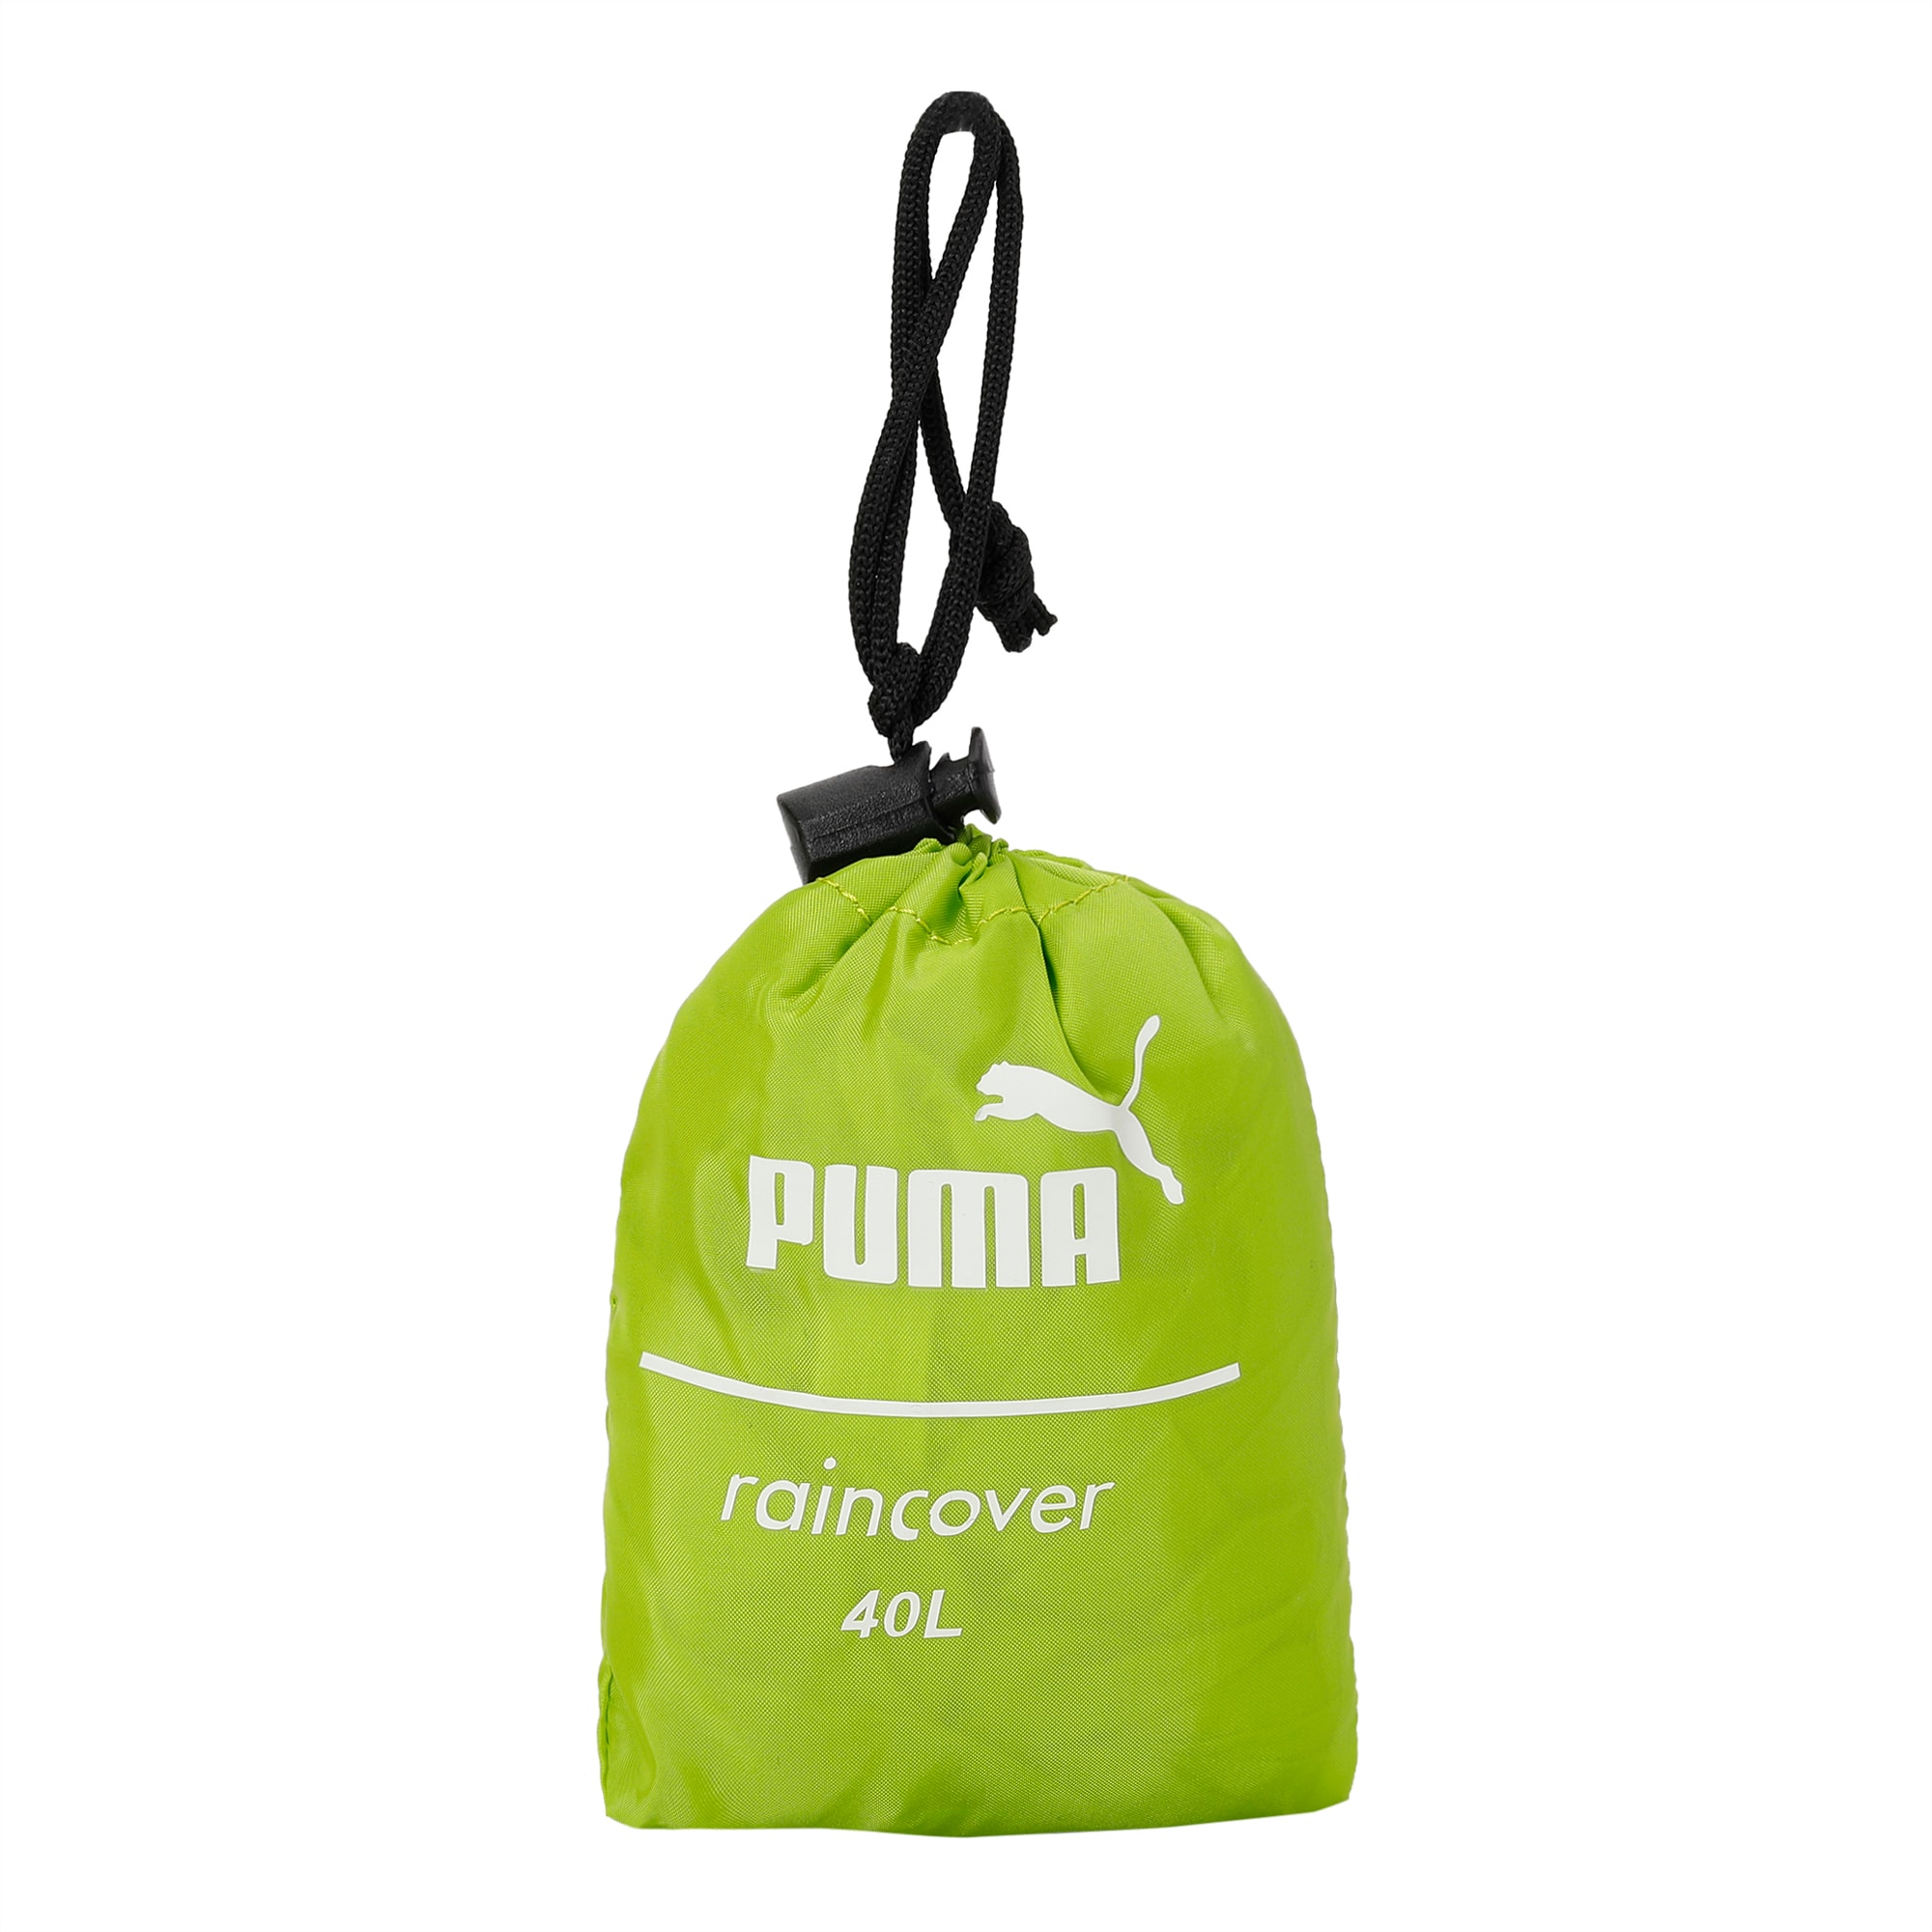 puma bags with rain cover